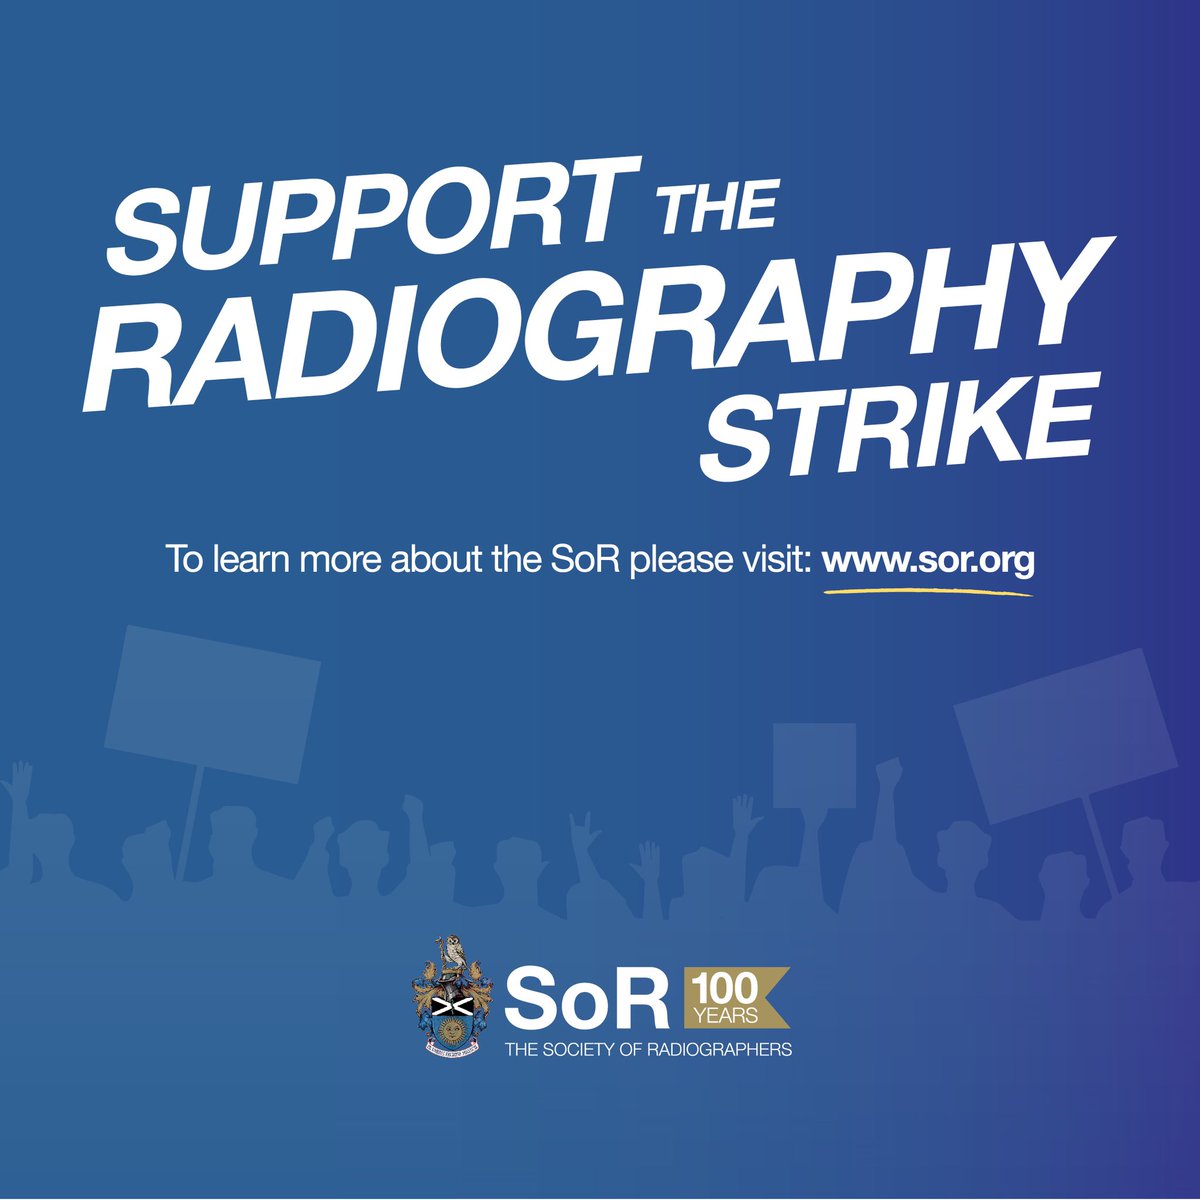 #radiographersstrike